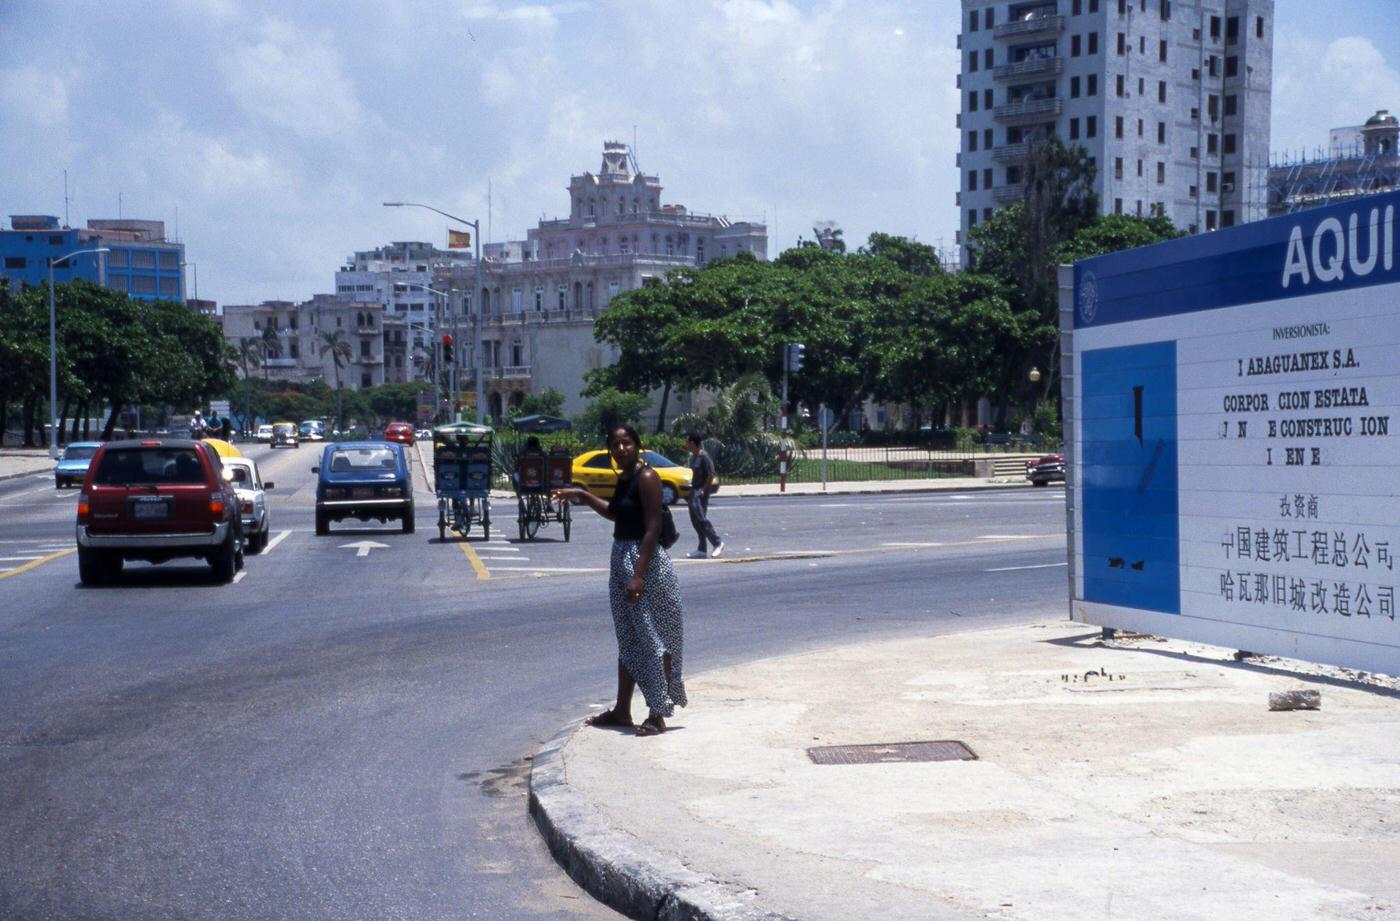 Billboards announcing new hotels to be built in Havana, Cuba, June 1999.